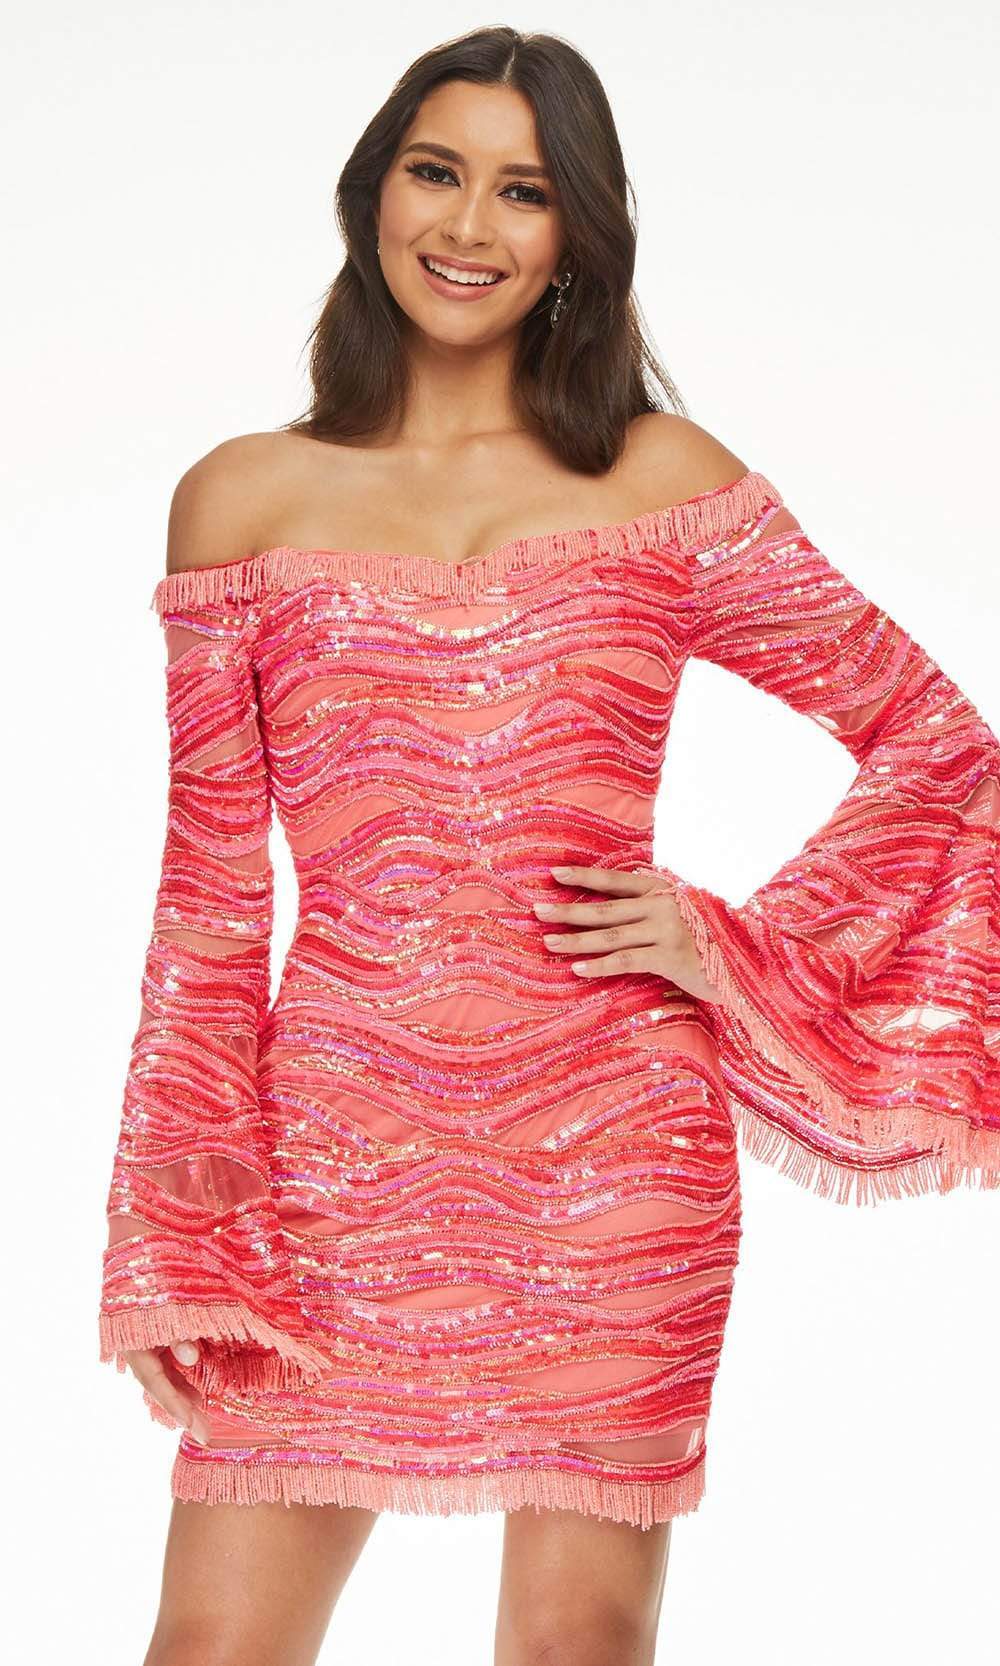 Ashley Lauren - 4440 Sequin and Fringed Short Fancy Dress Cocktail Dresses 0 / Hot Pink